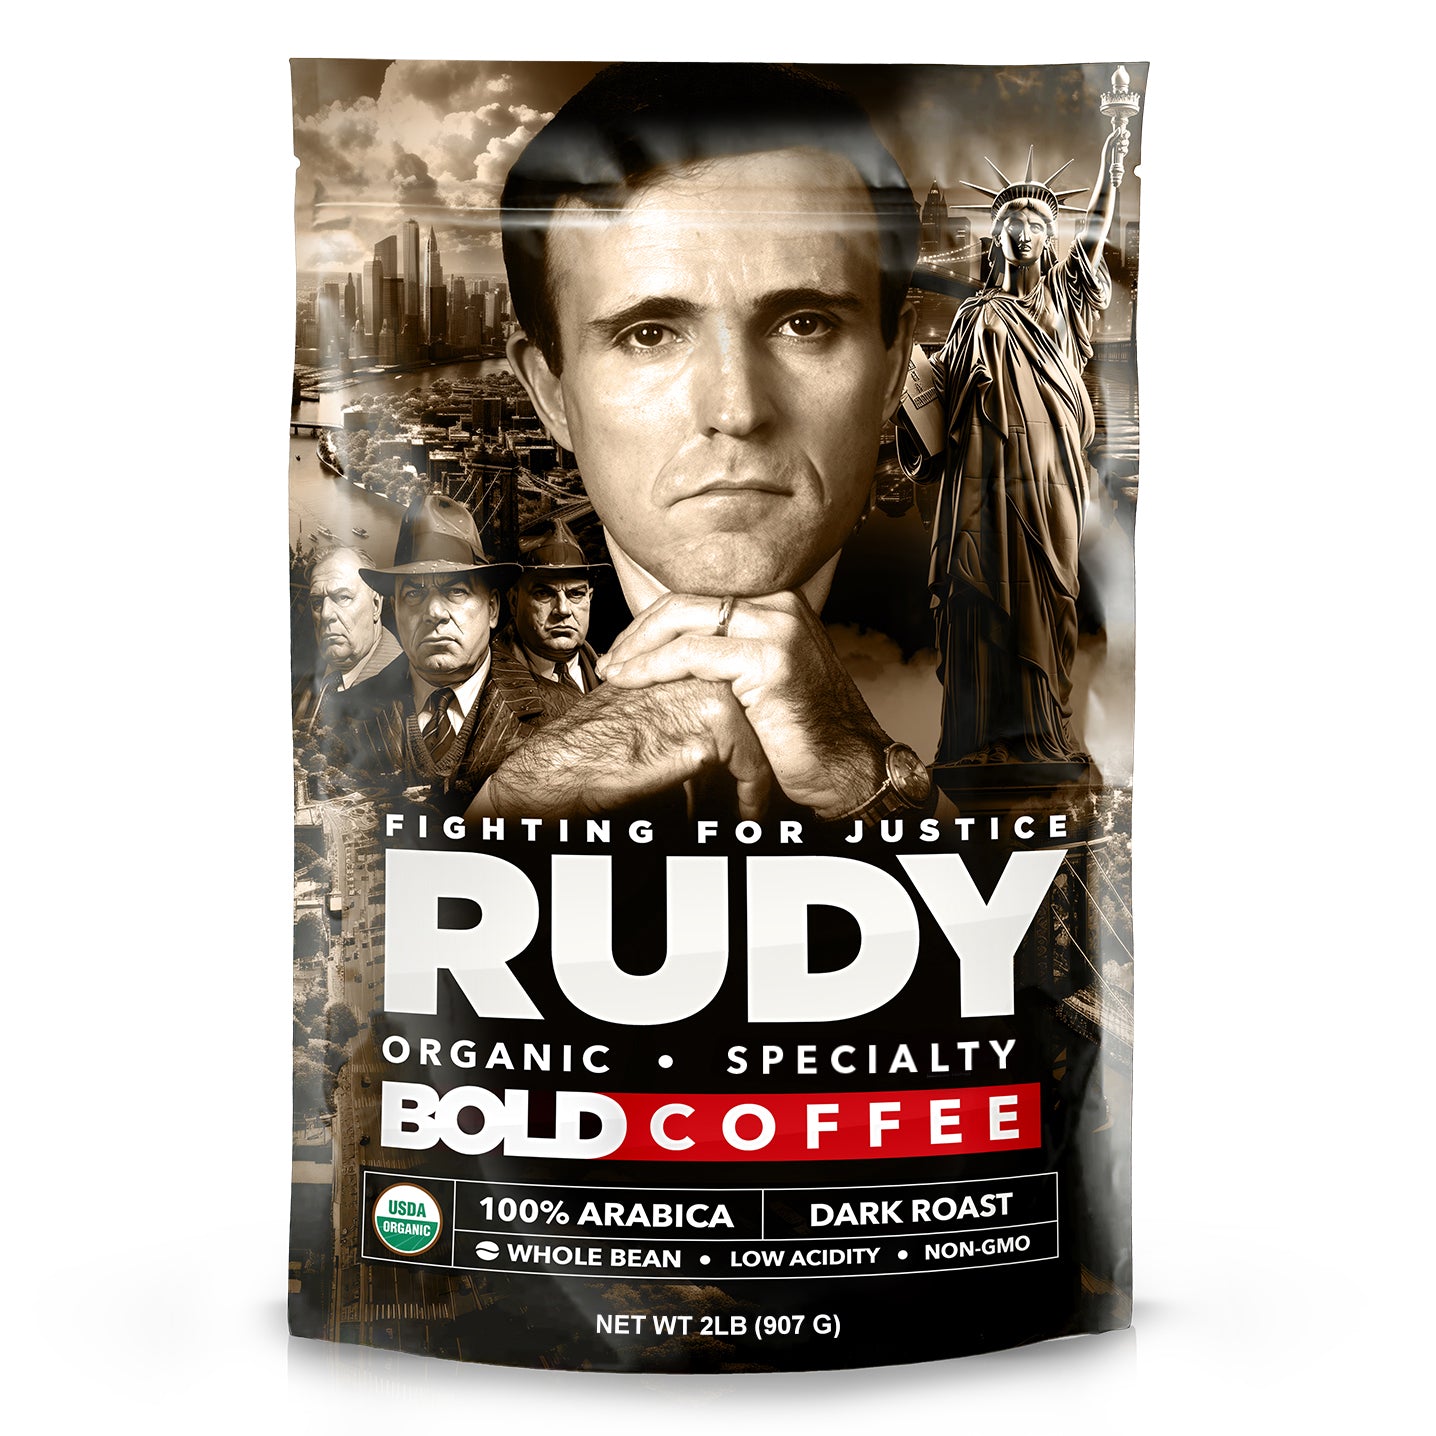 Rudy Bold Coffee